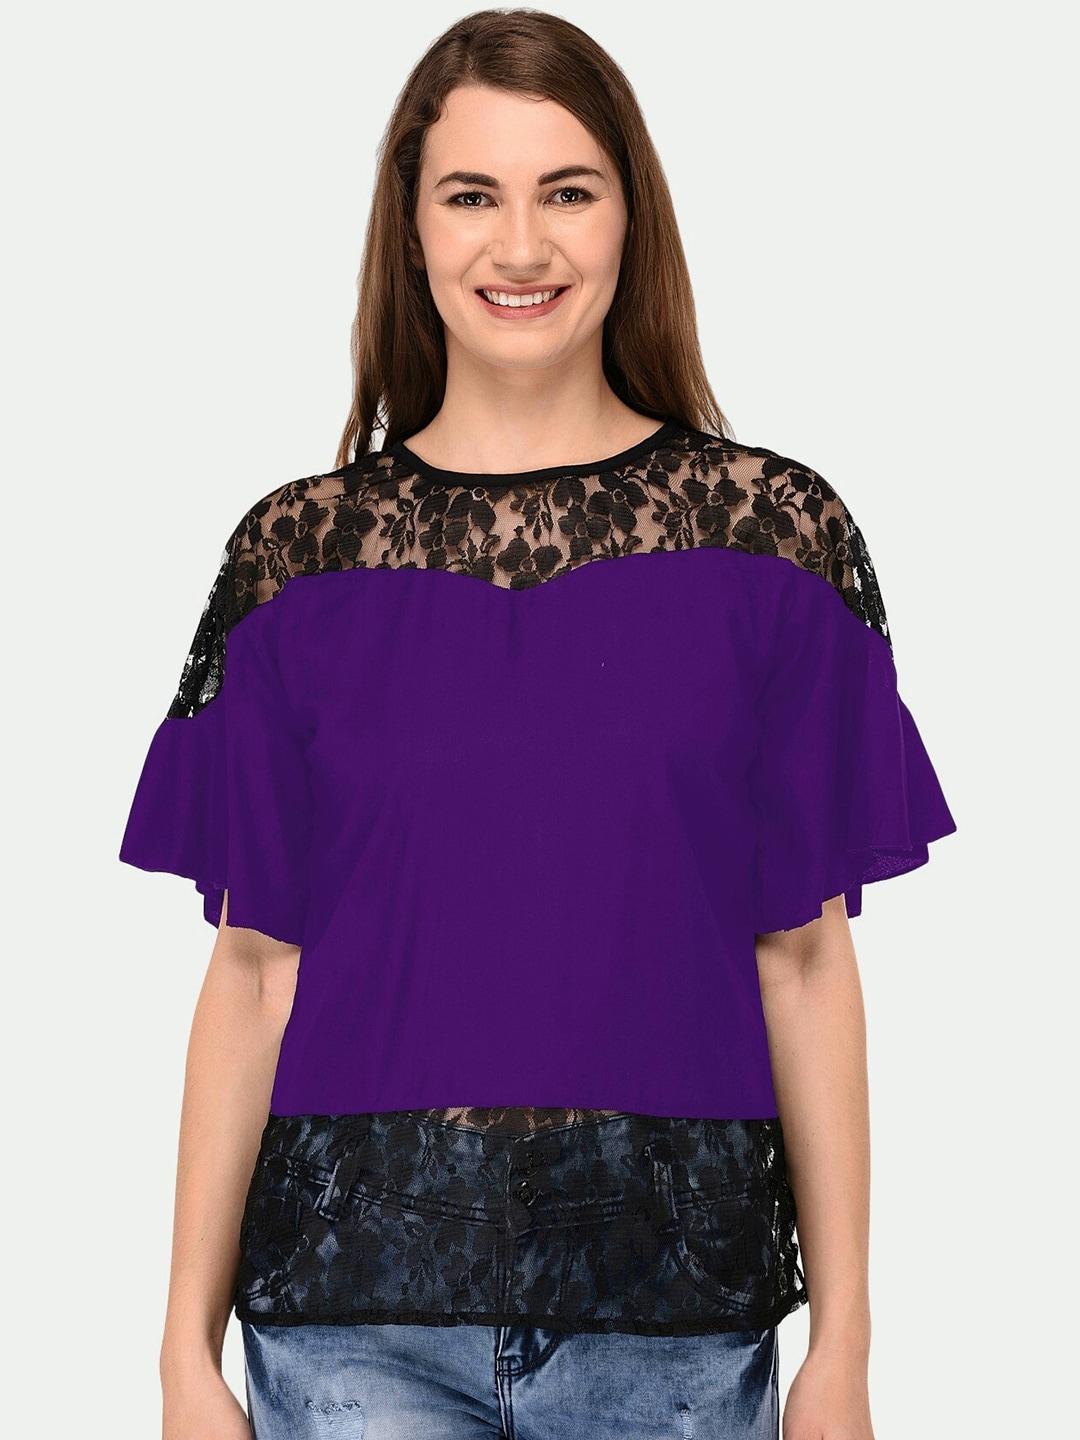 patrorna-women-purple-&-black-round-neck-flared-sleeves-top